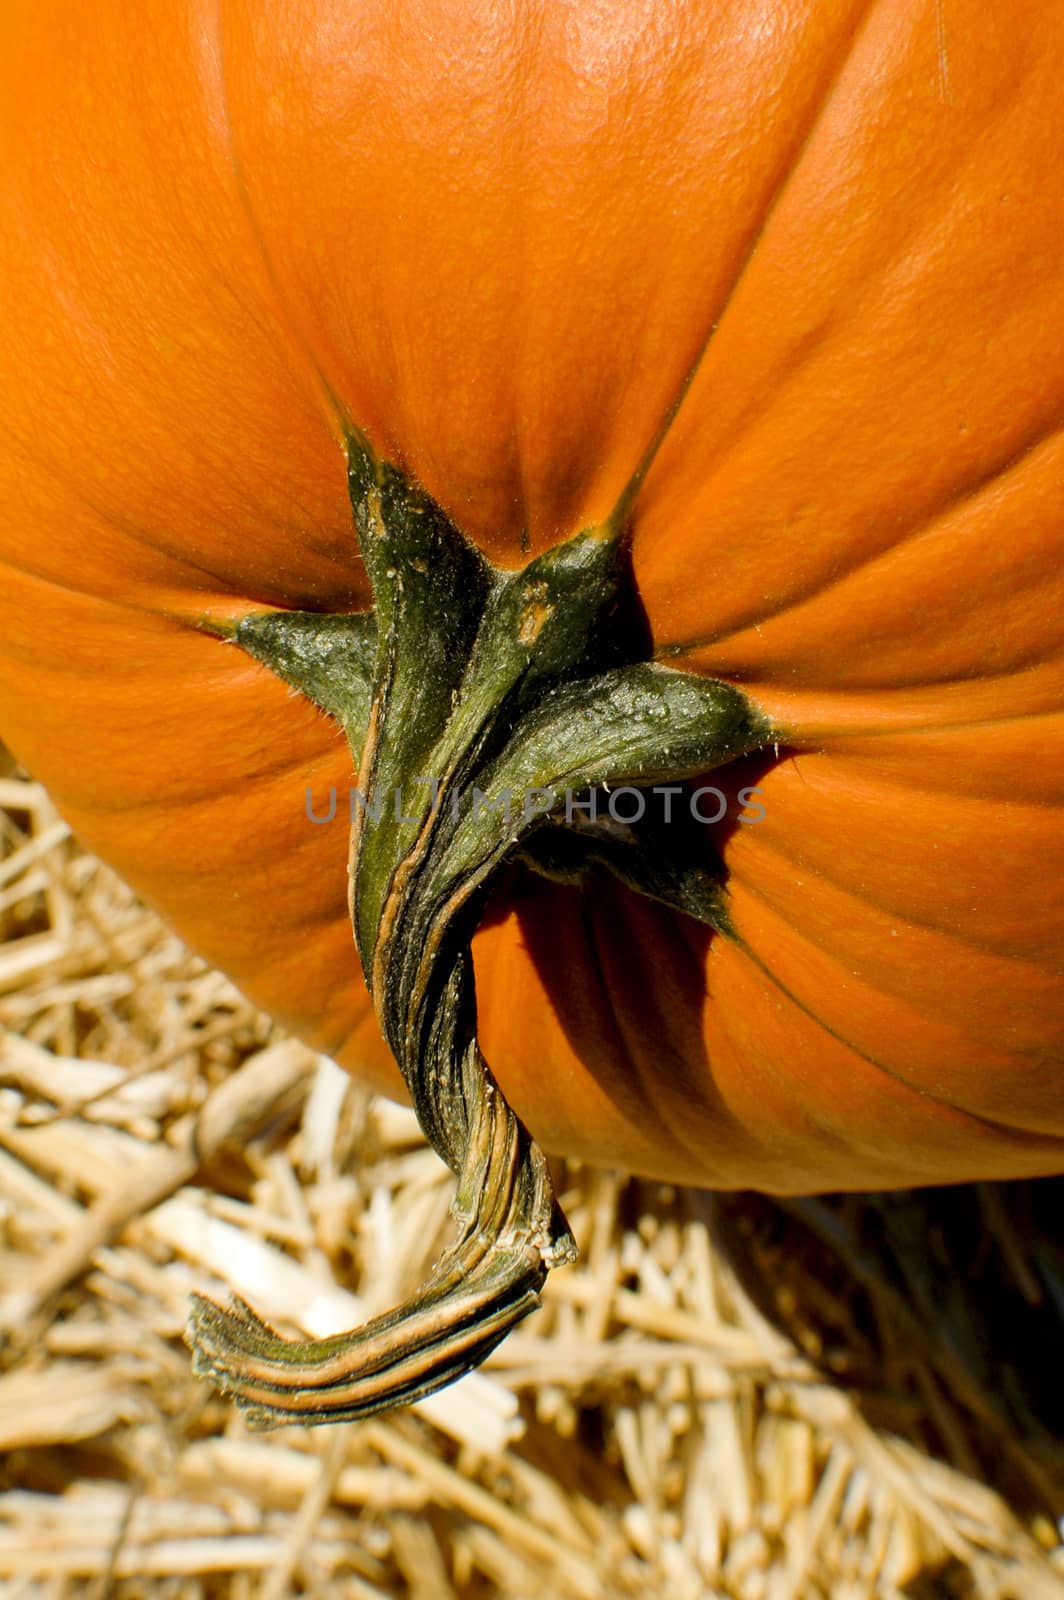 Pumpkin with stem